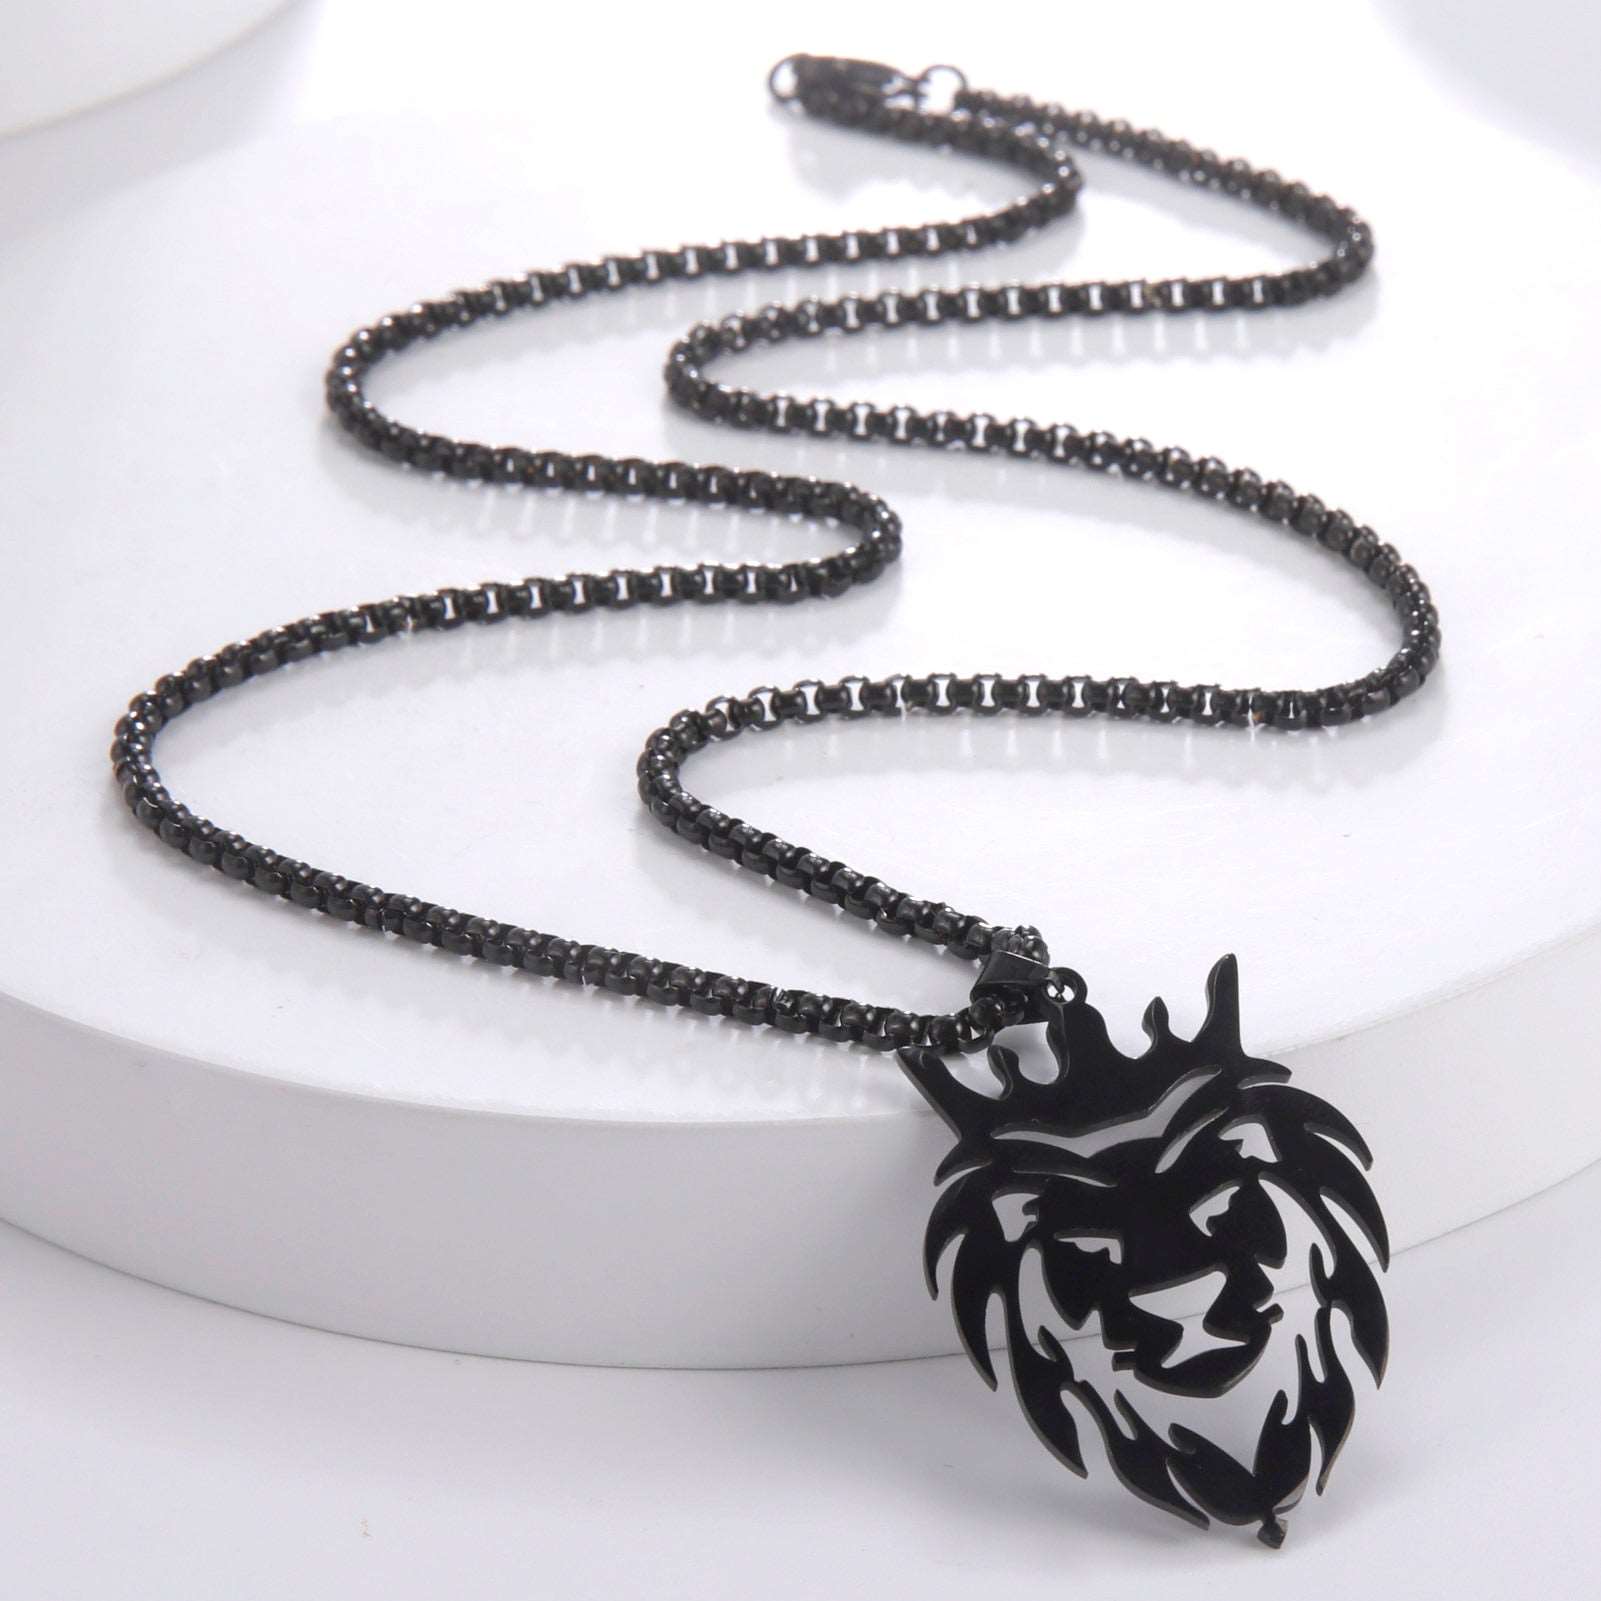 Lion with Royal Crown Chain Necklace Black Men's Necklace